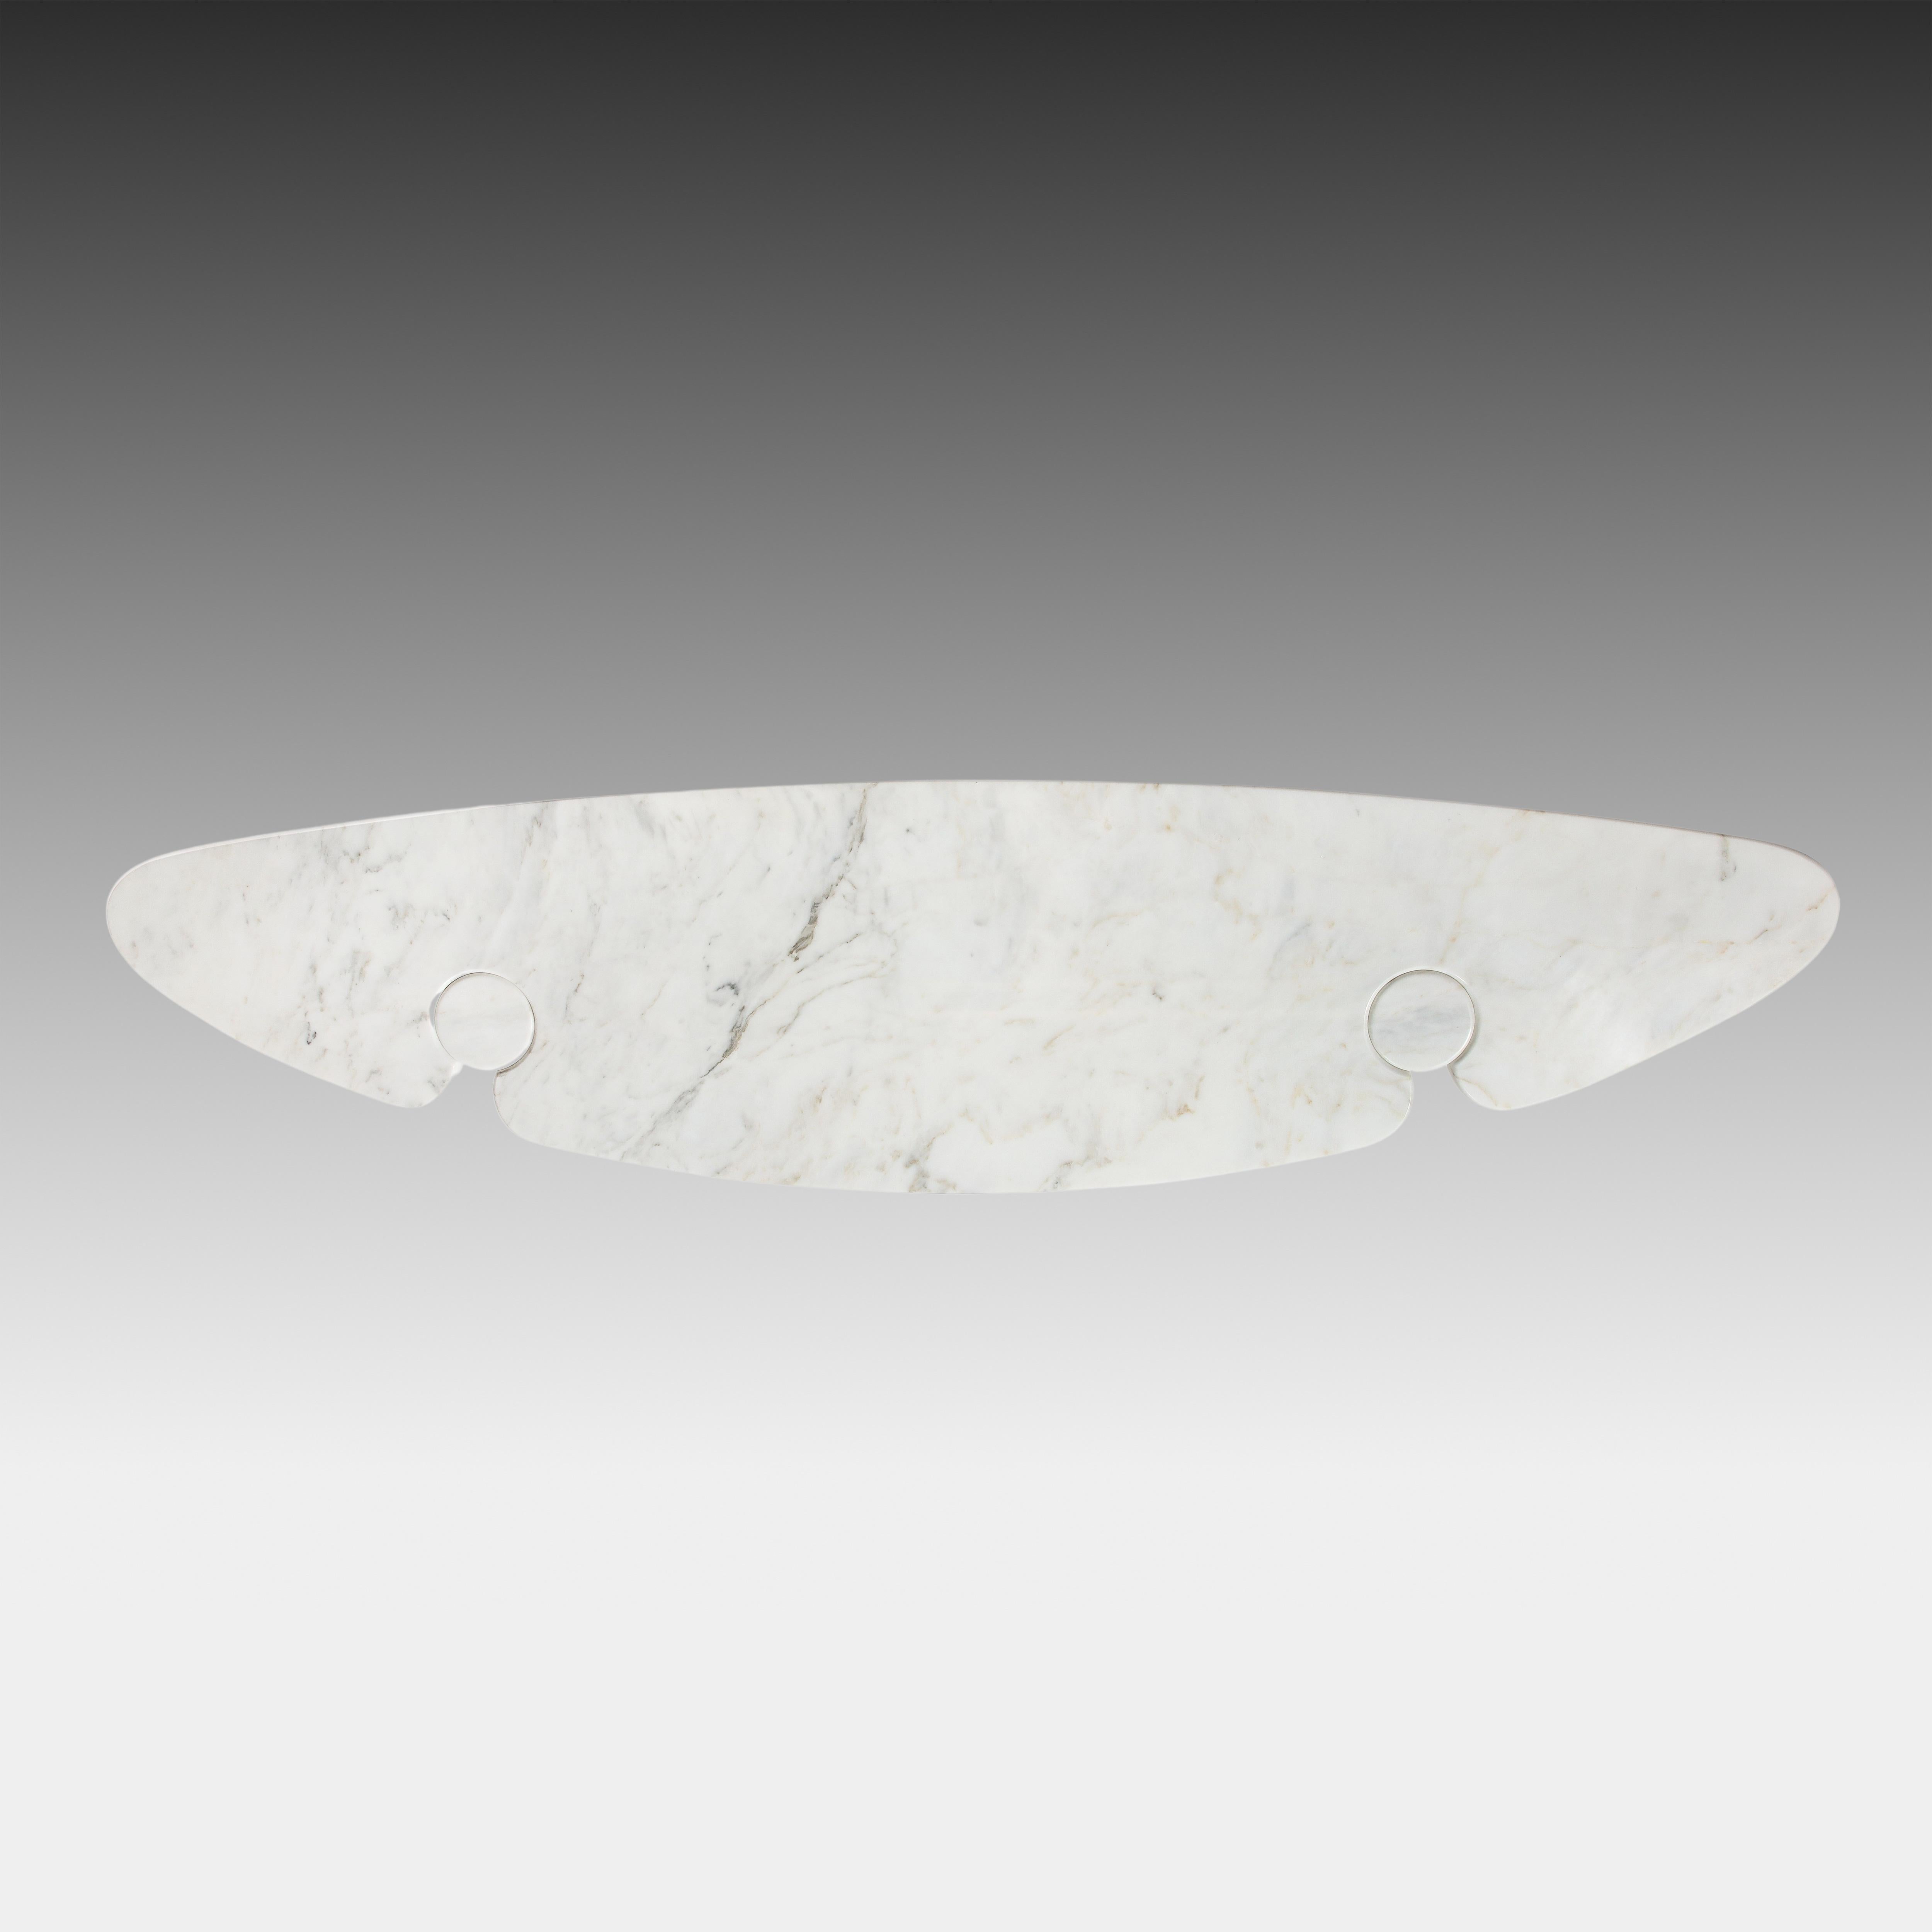 Angelo Mangiarotti Eros Series Carrara Marble Console Table, Skipper Label For Sale 4